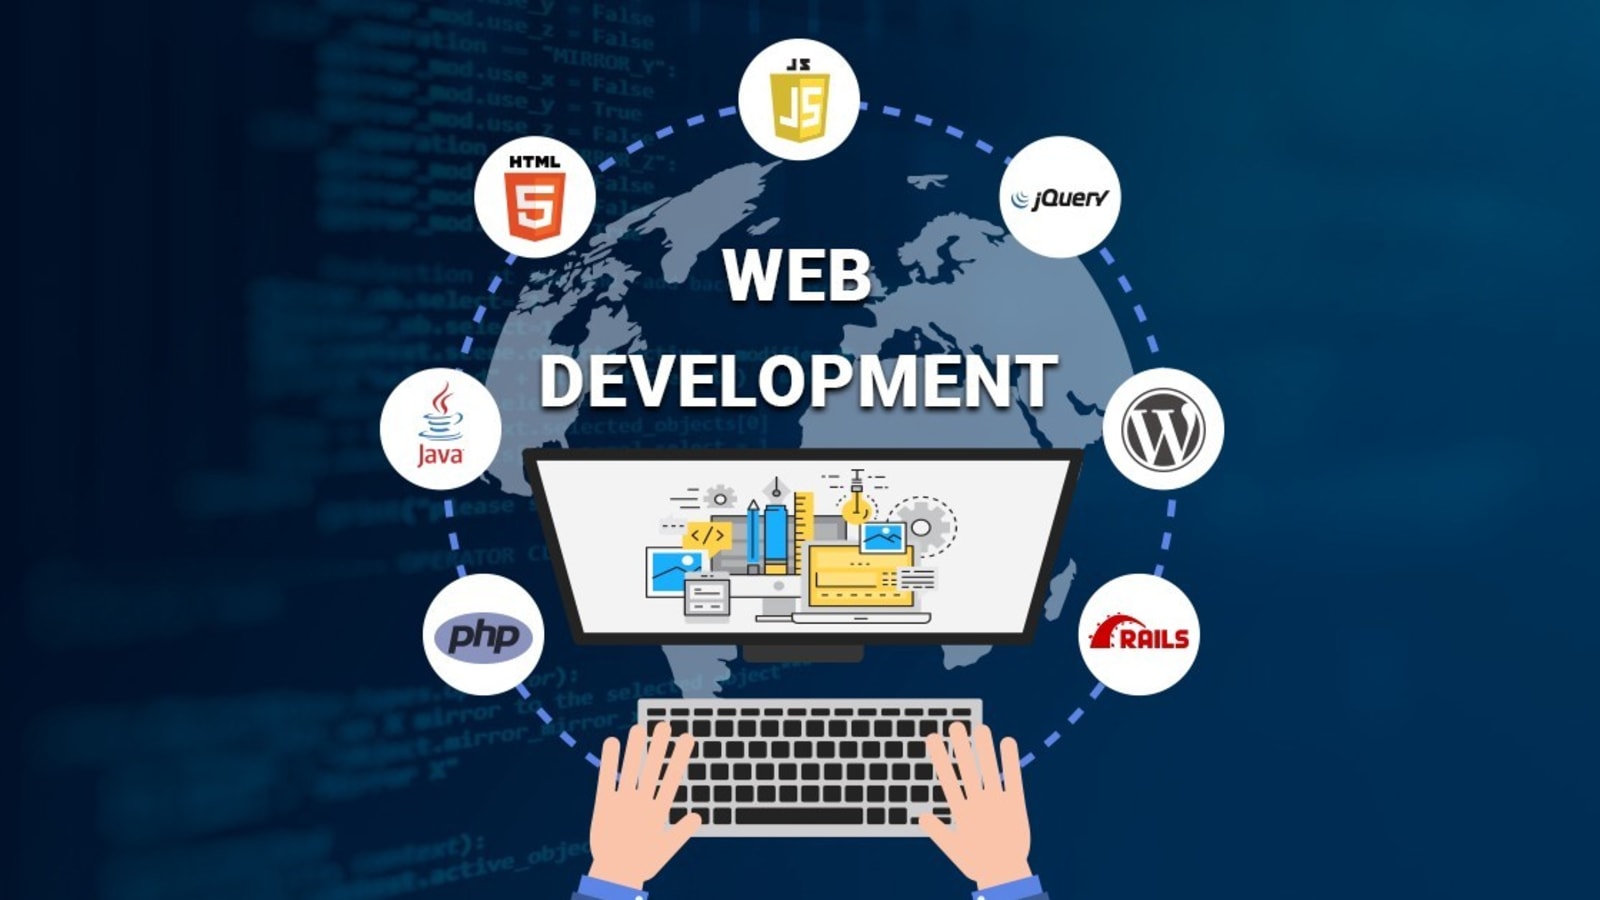 Web Application Development: The BASIC Concepts